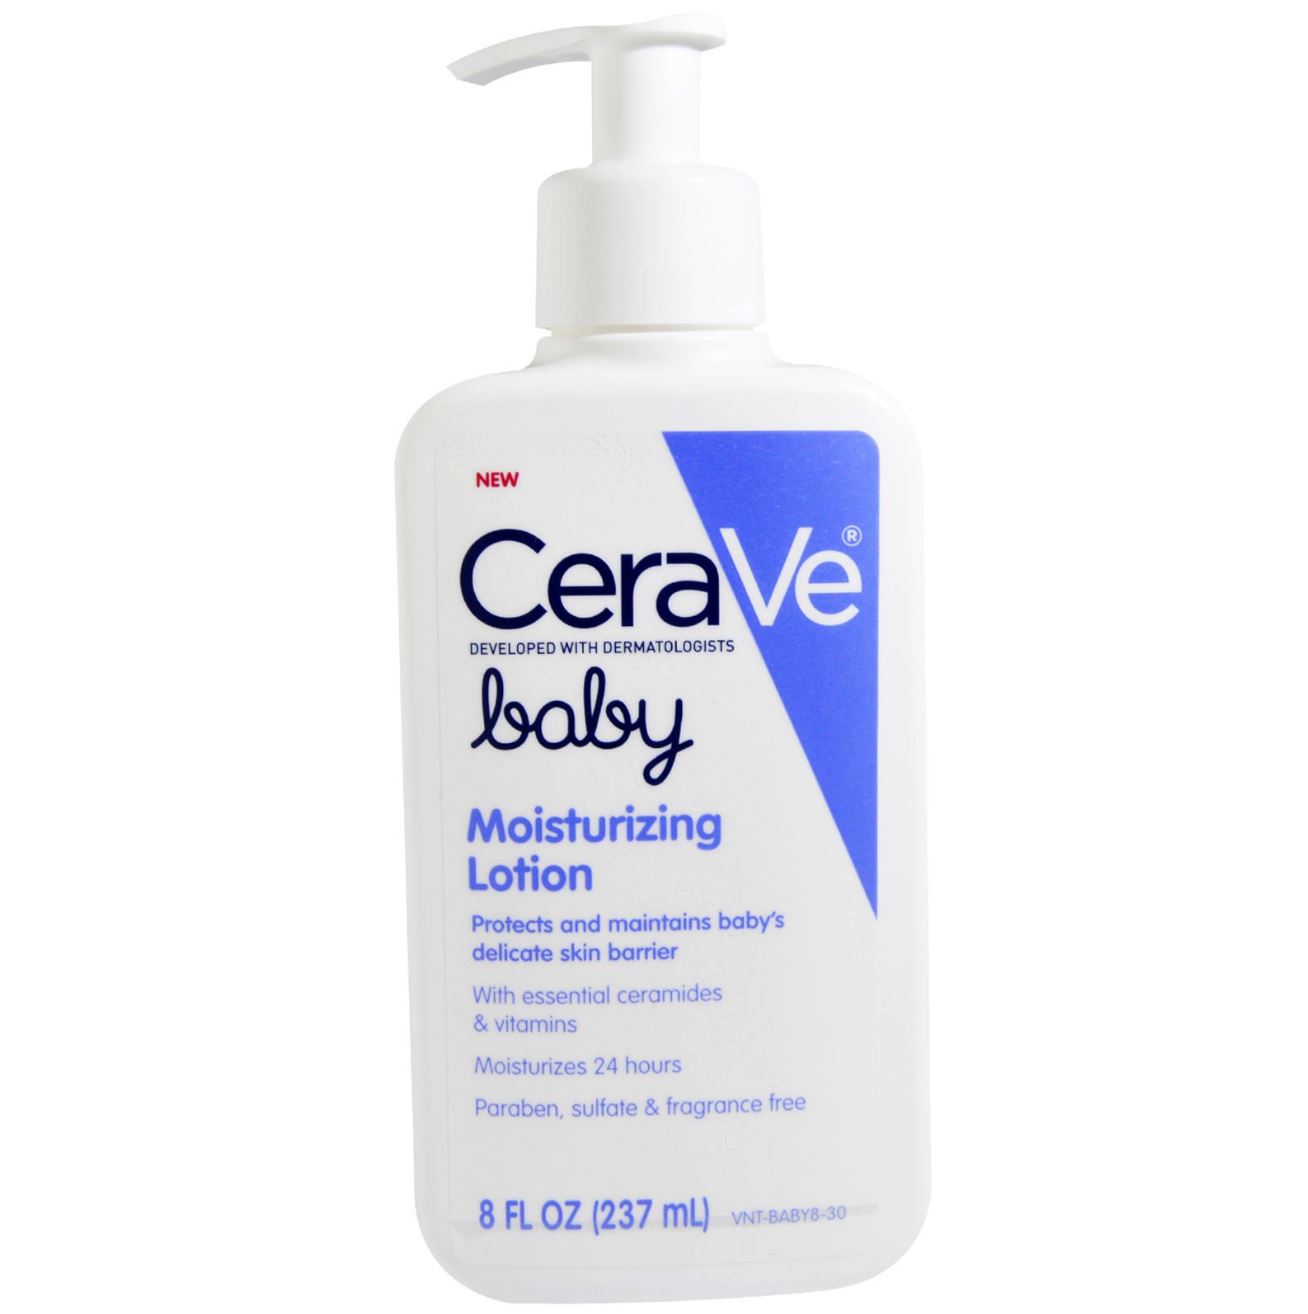 Cerave Baby, Moisturizing lotion